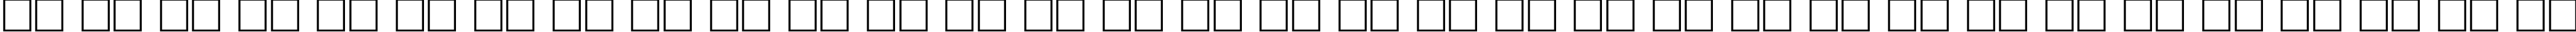 Пример написания русского алфавита шрифтом AGZeppelin-Roman